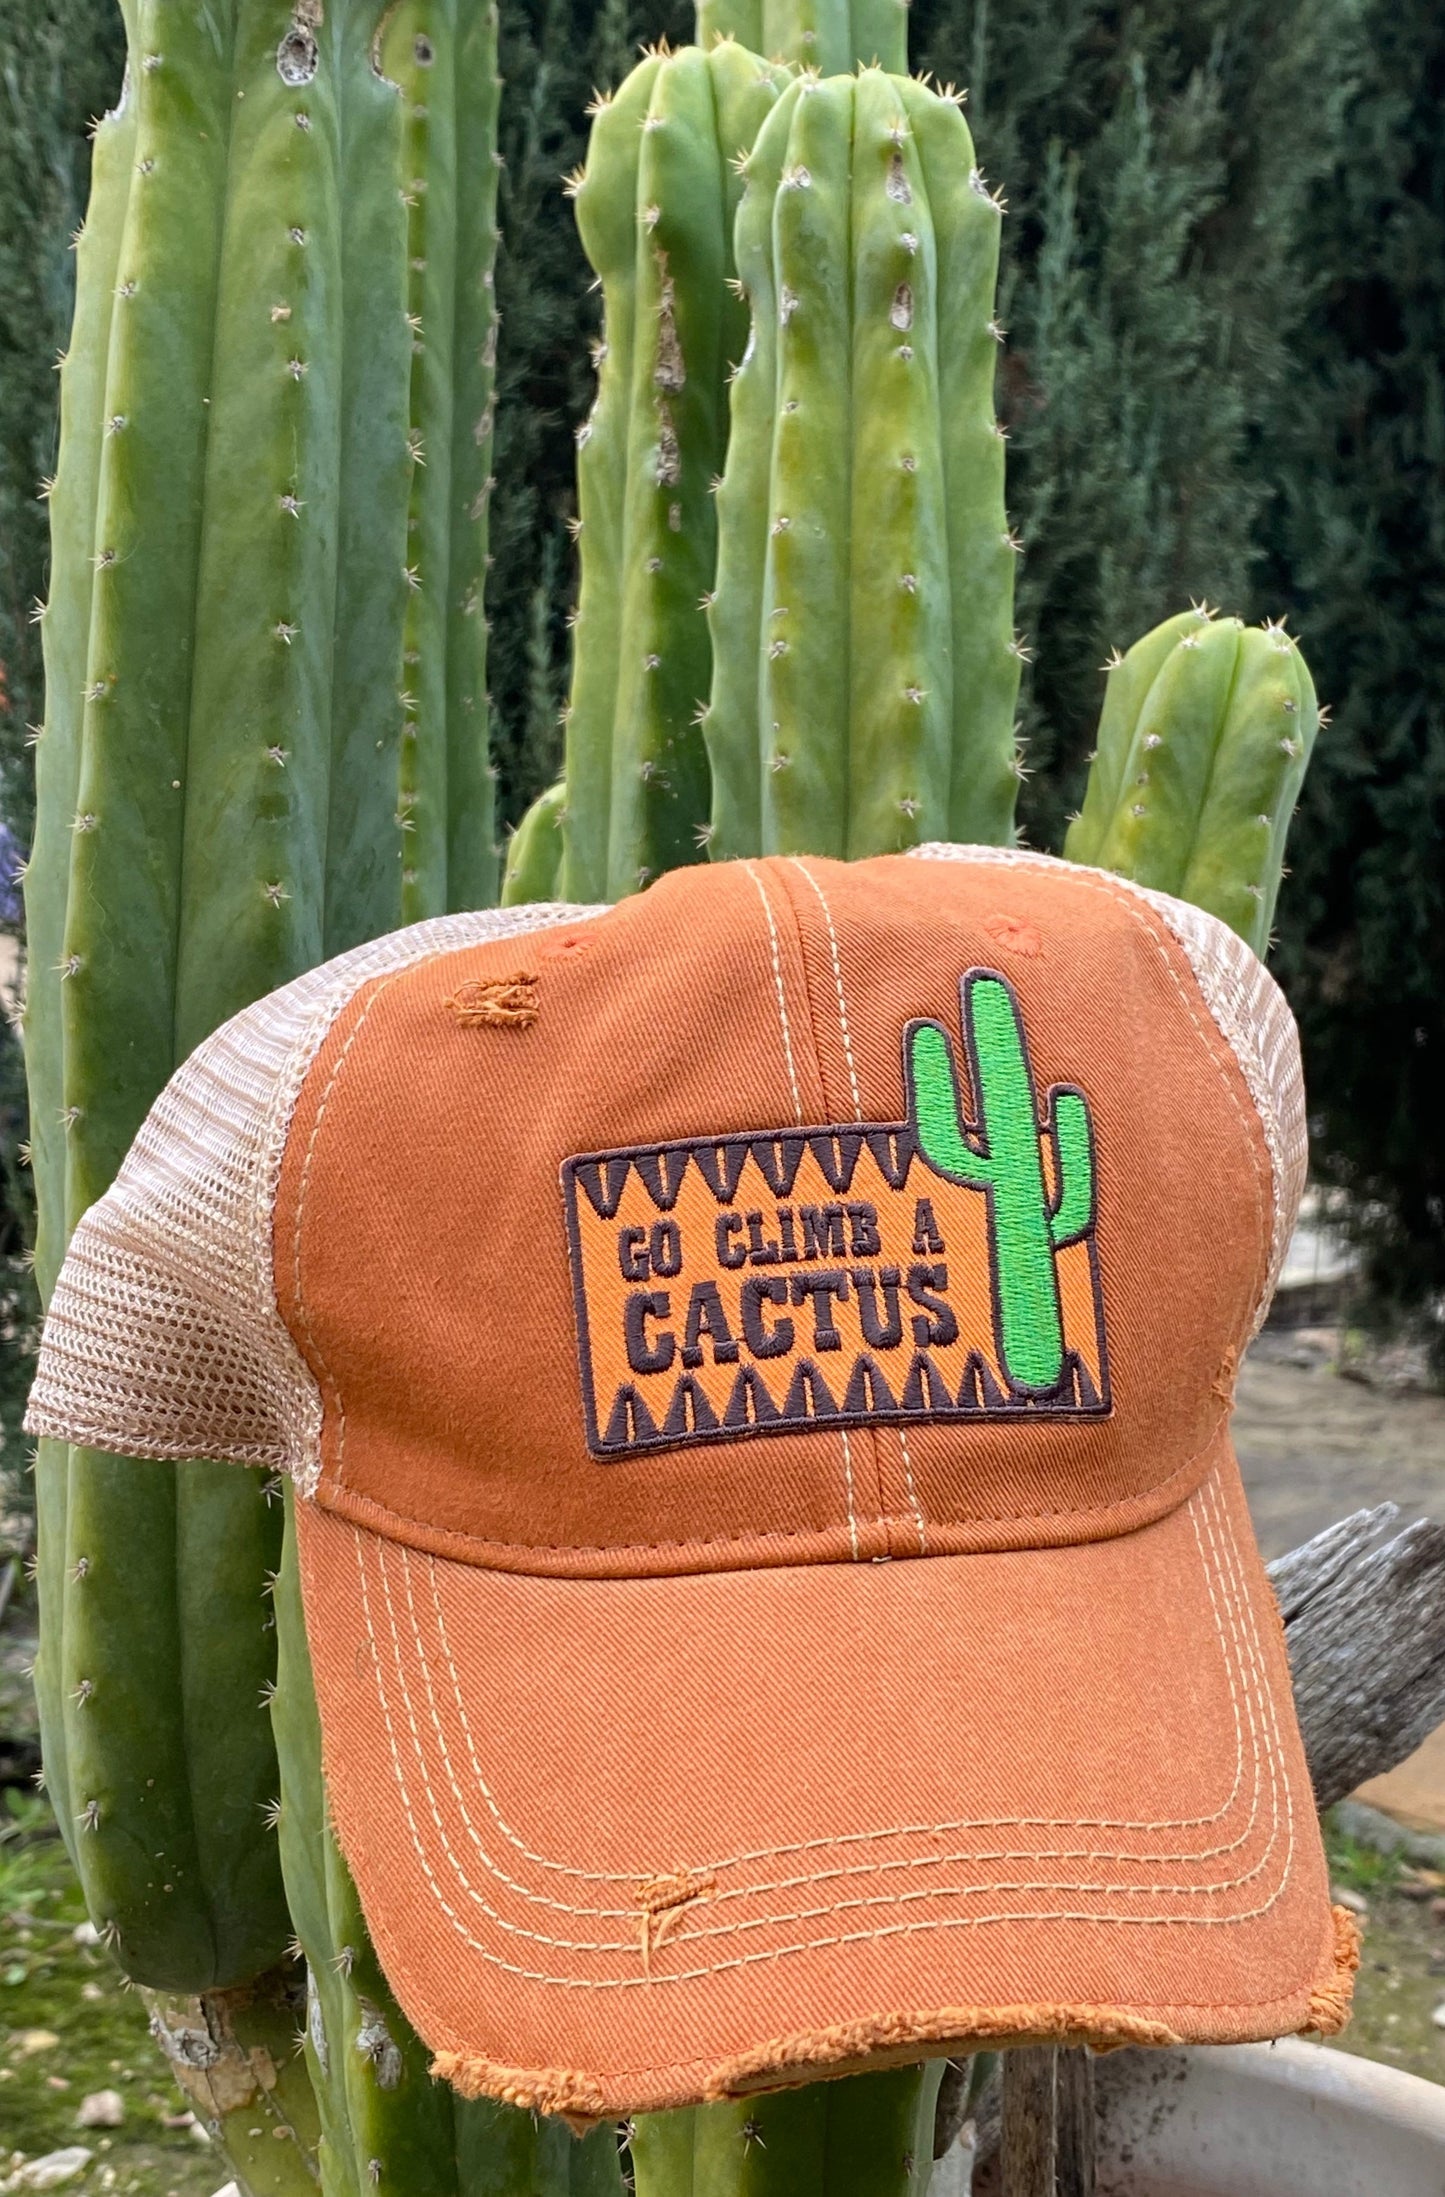 Go Climb a Cactus Patch Cap Five Colors Bulk